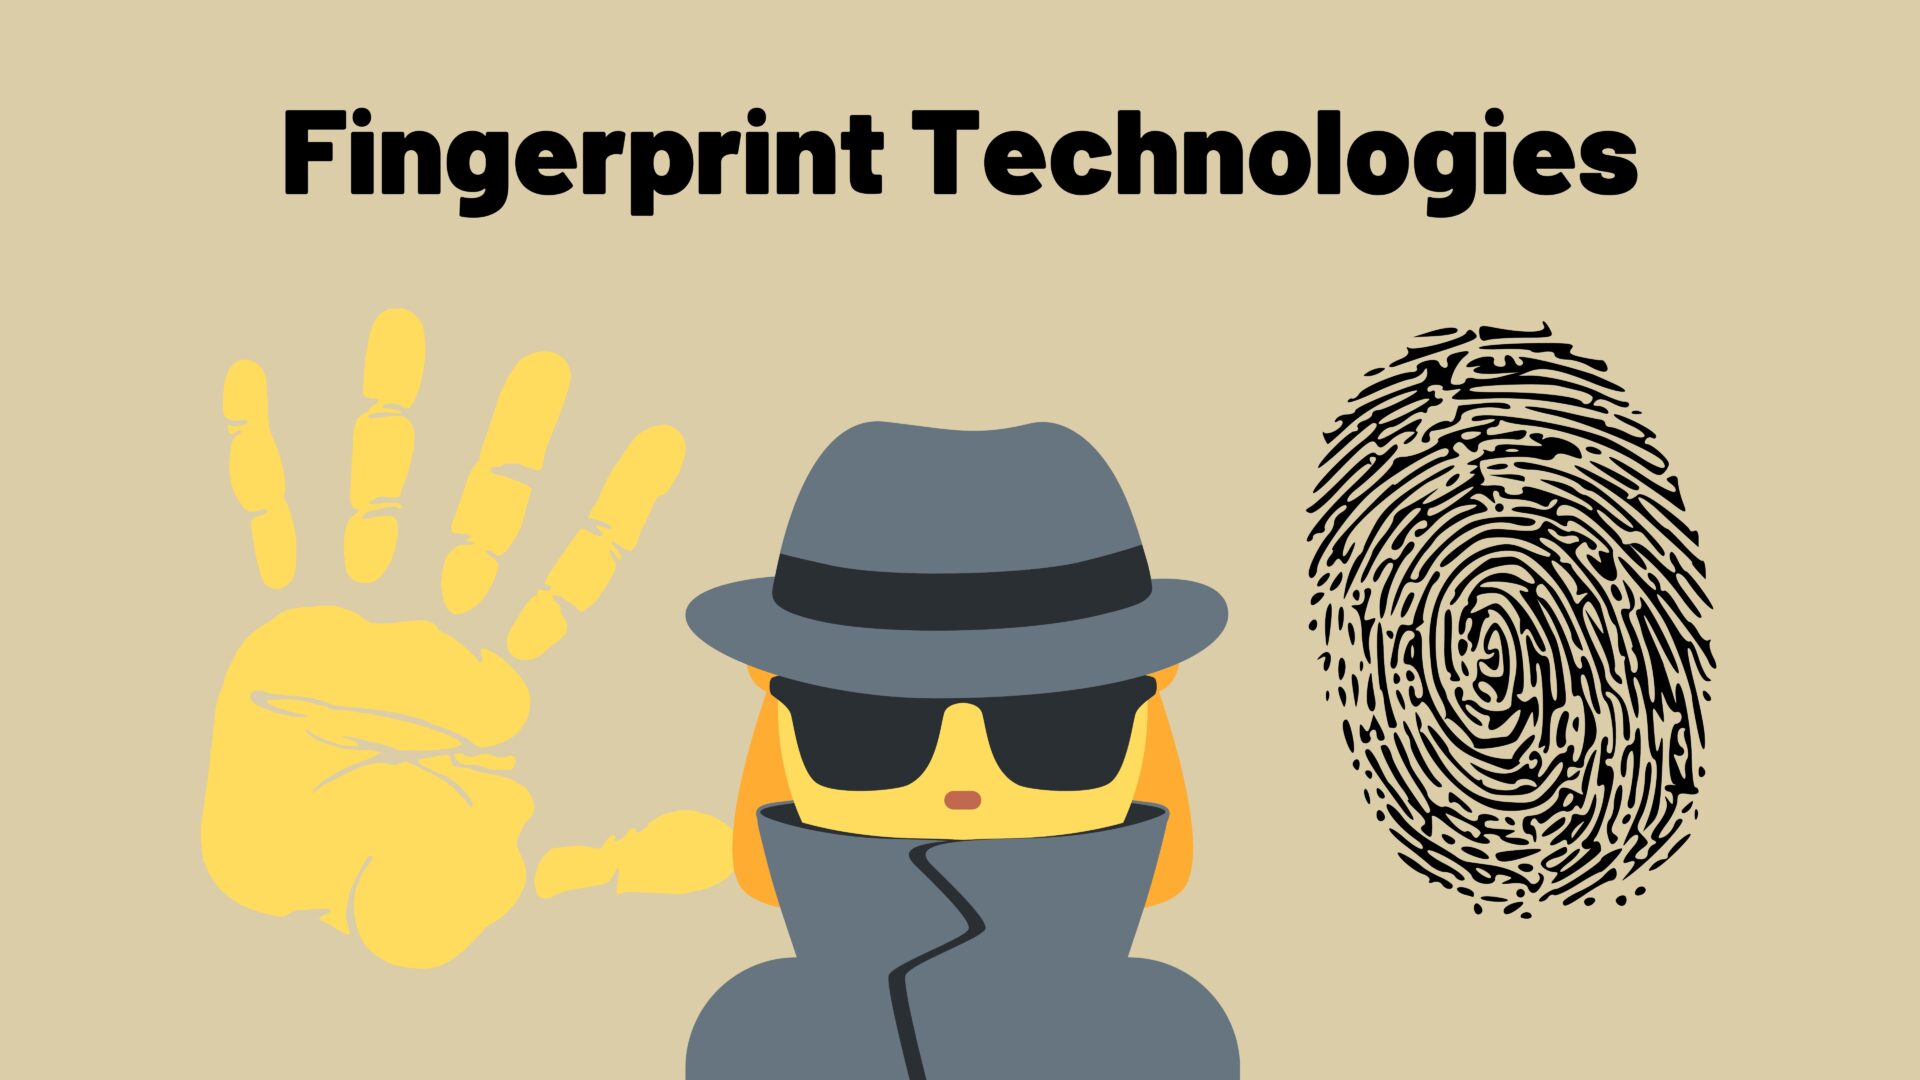 Fingerprint Technologies